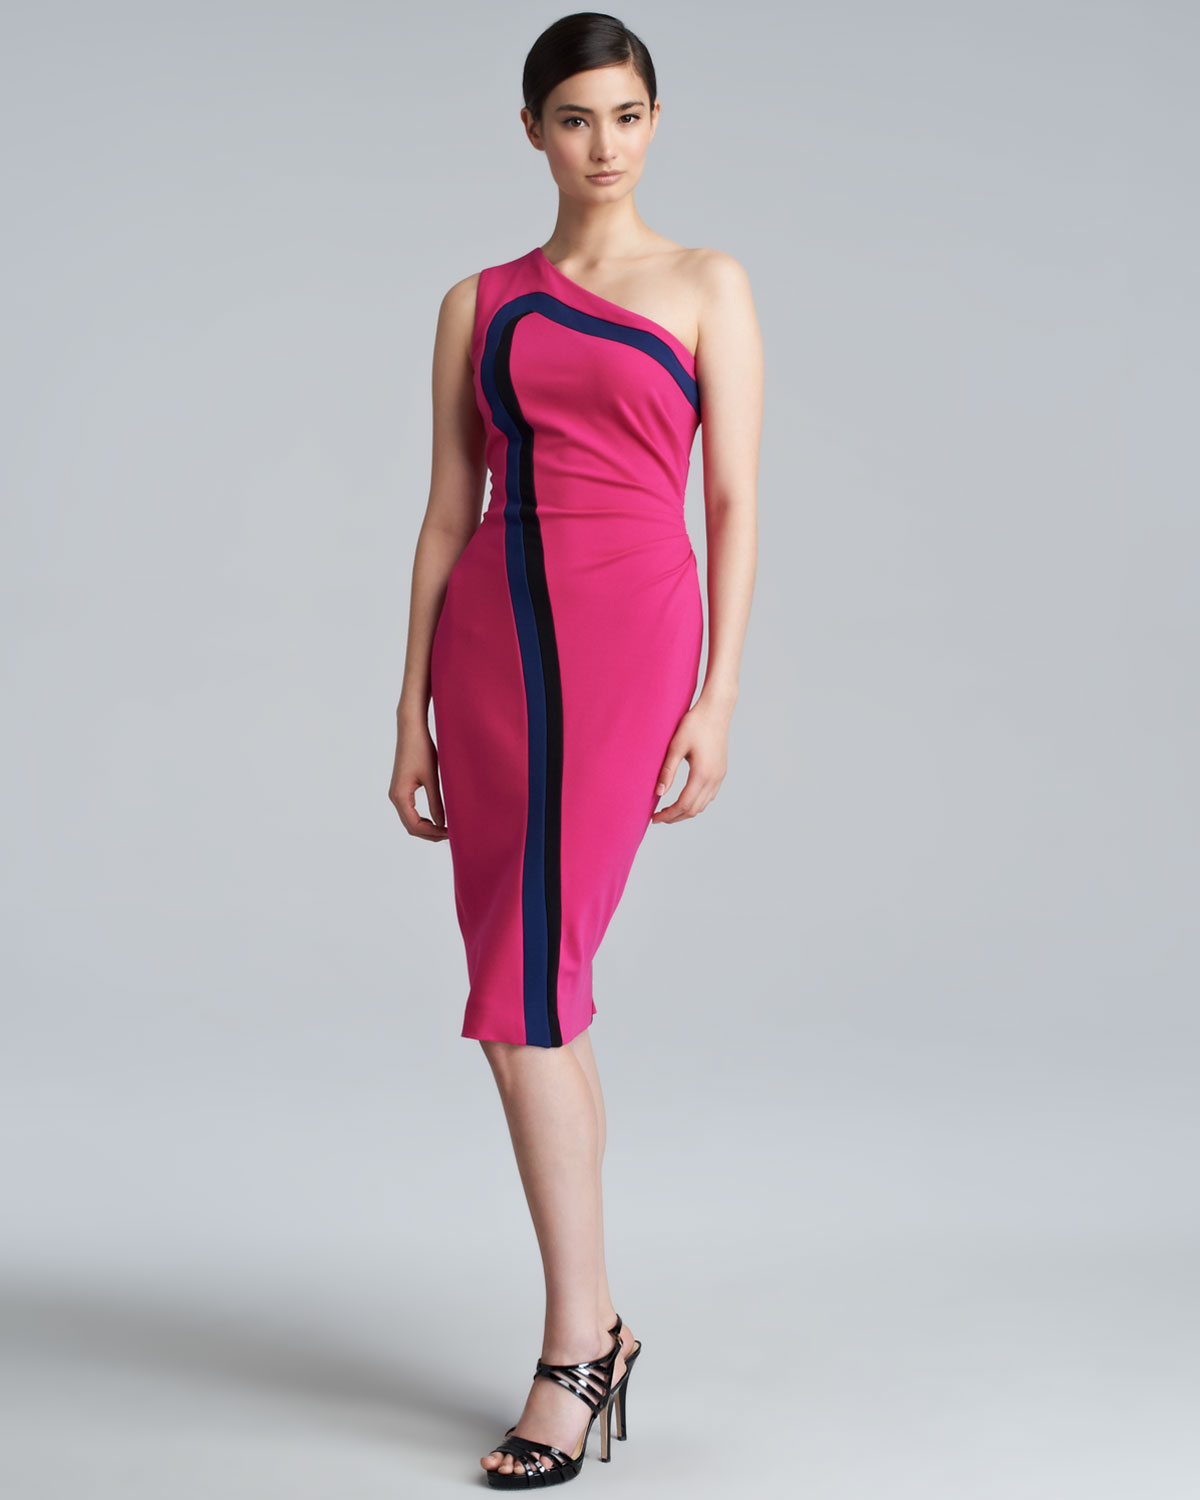 Hot Pink Jersey Dresses | Best Dresses 2019